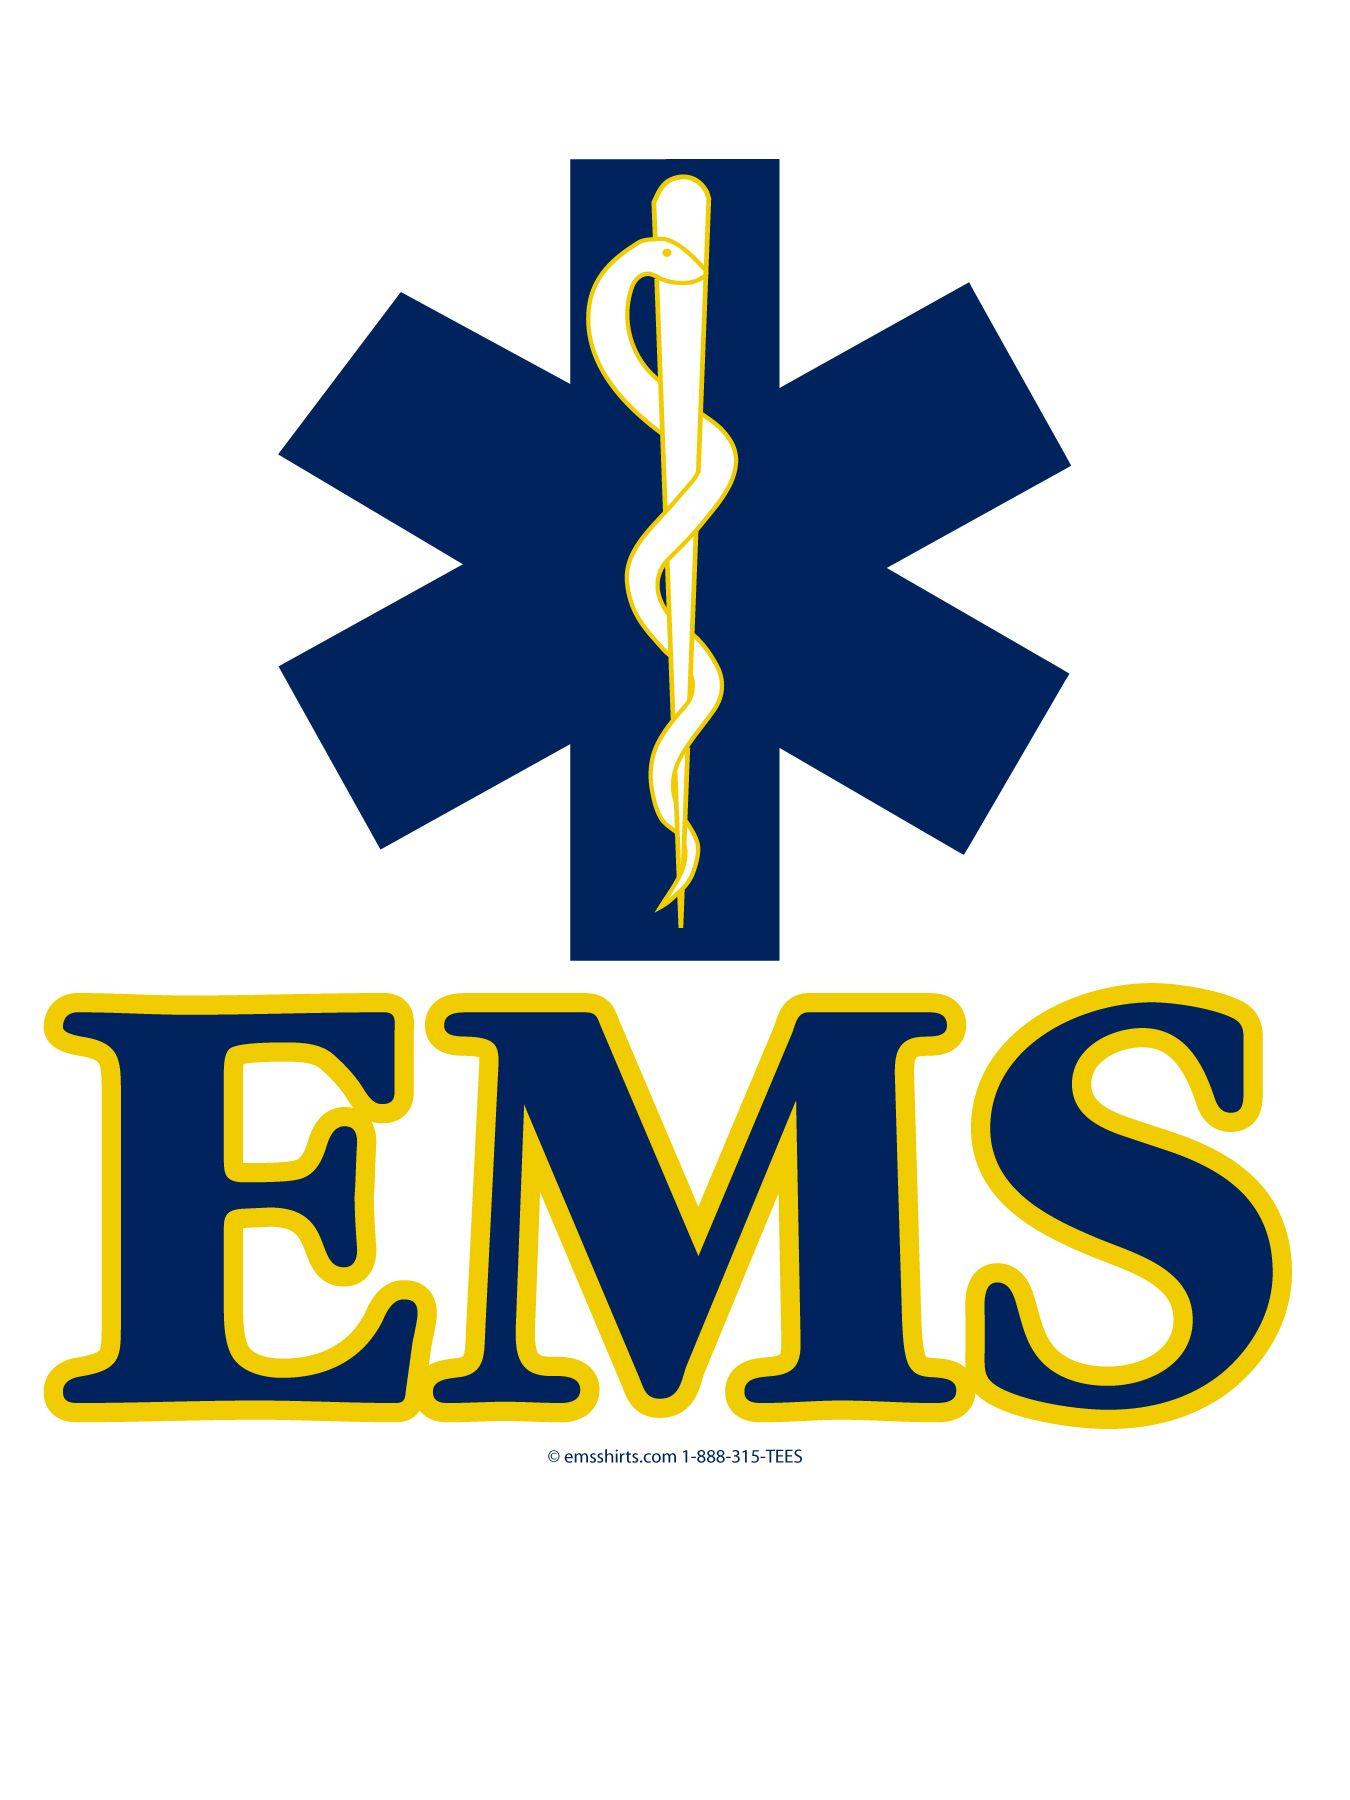 EMT Logo - Free EMS Cliparts, Download Free Clip Art, Free Clip Art on Clipart ...